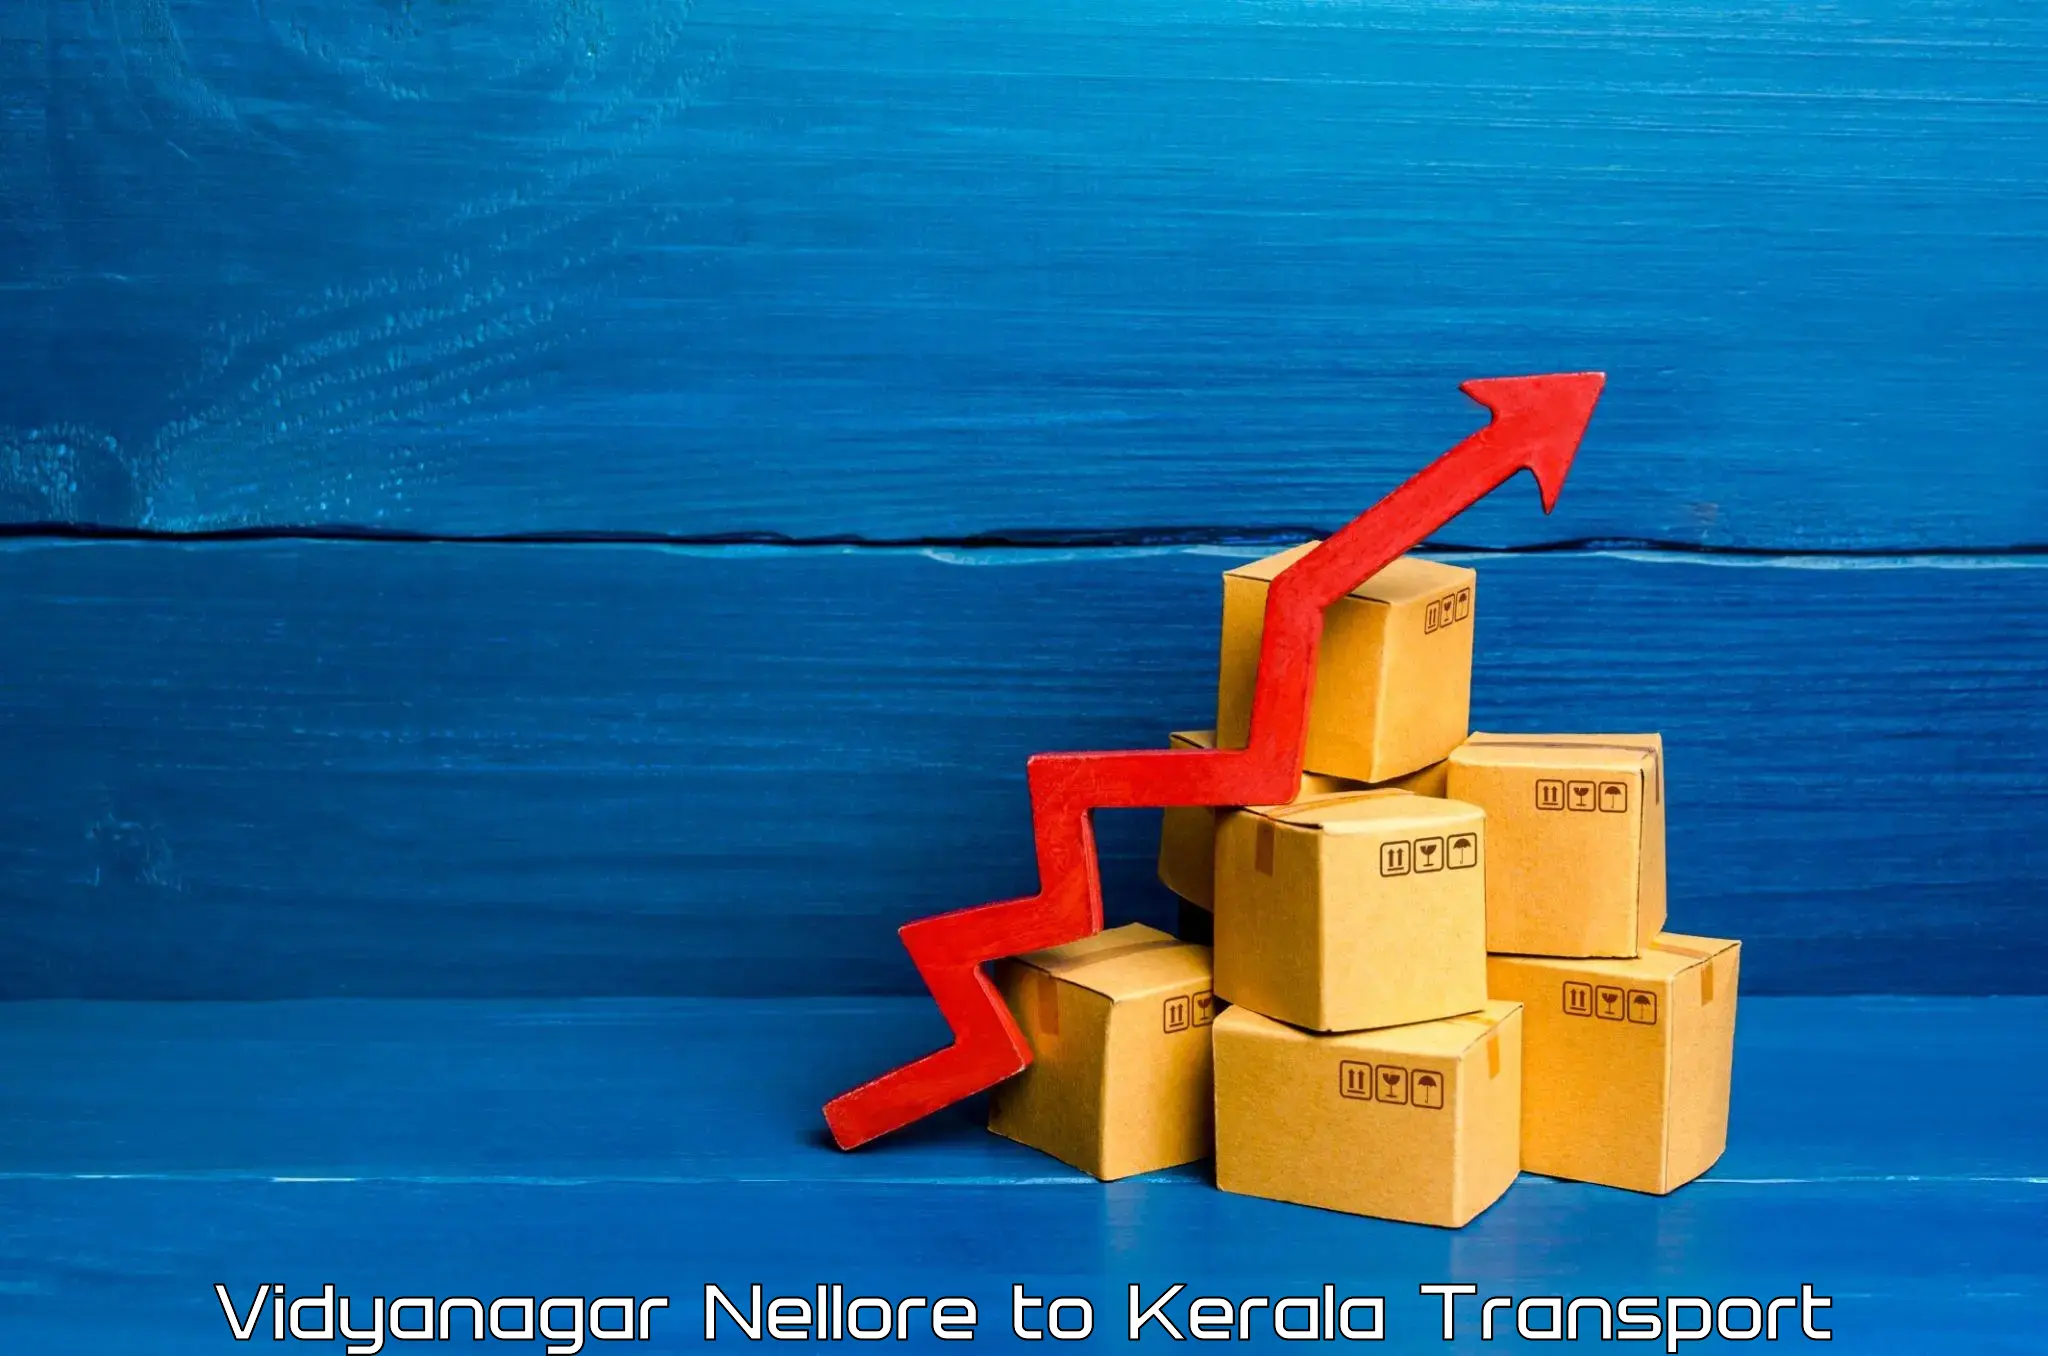 Nearest transport service Vidyanagar Nellore to Pandikkad